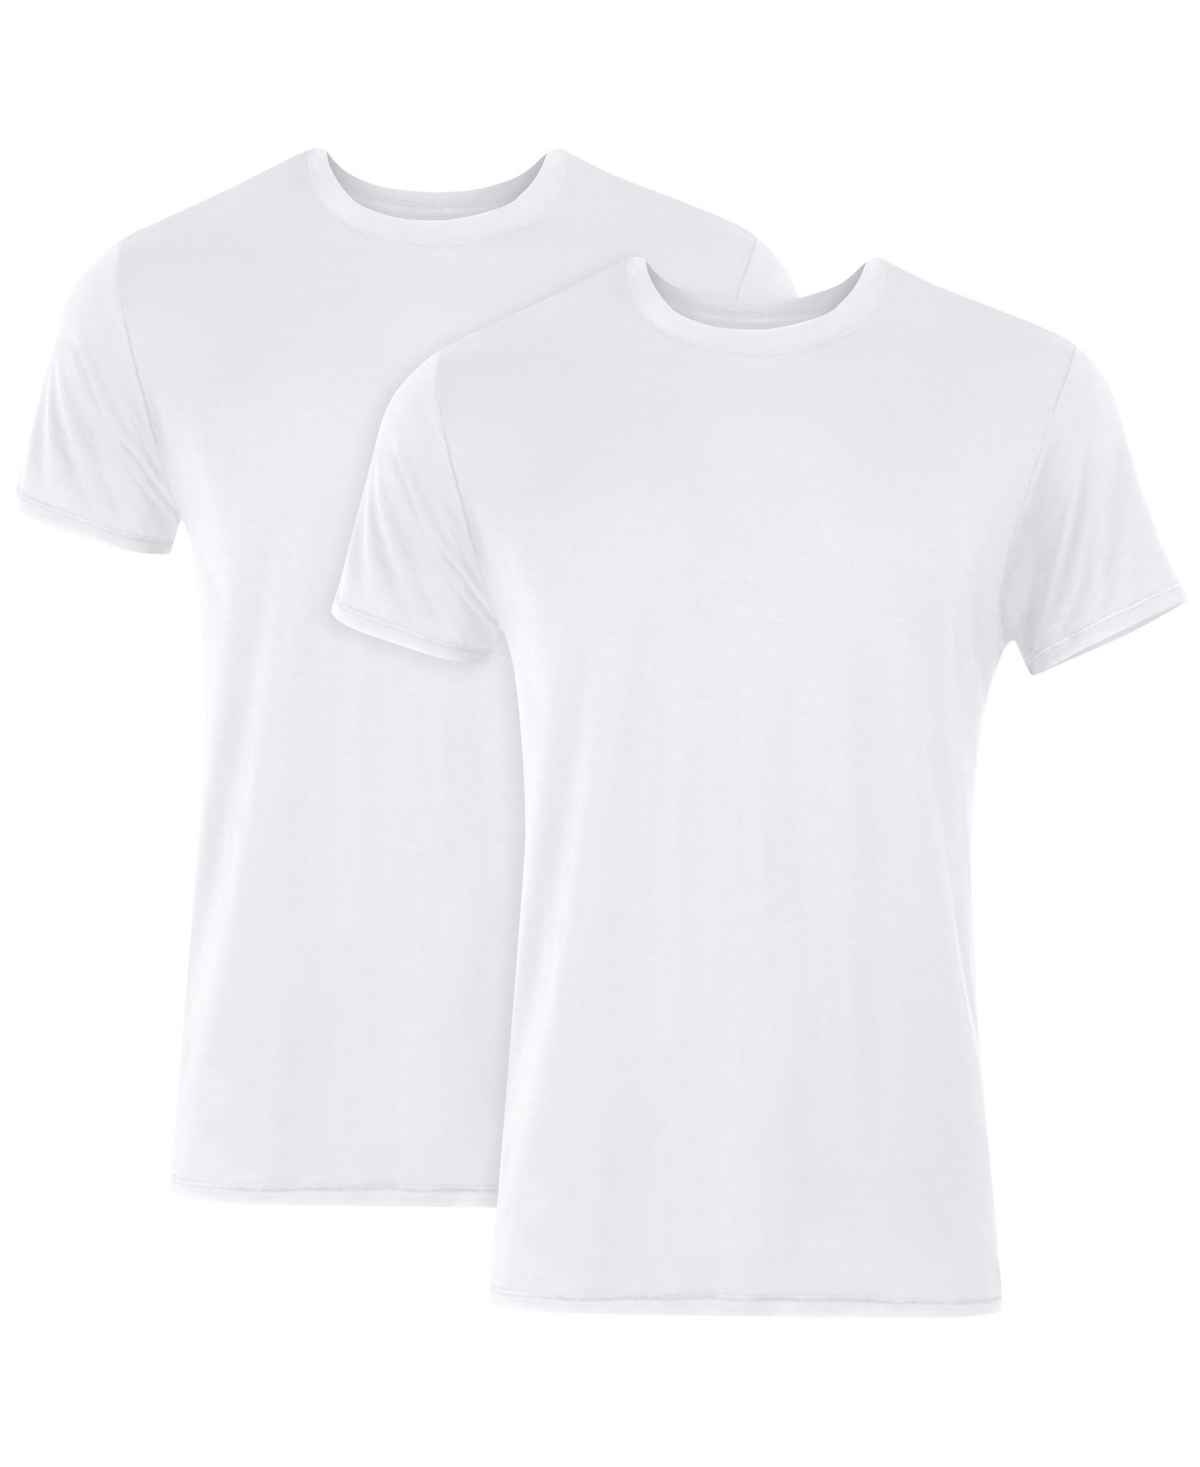 Originals Ultimate Men's SuperSoft Crewneck T-Shirts, White, 2-Pack - Assorted